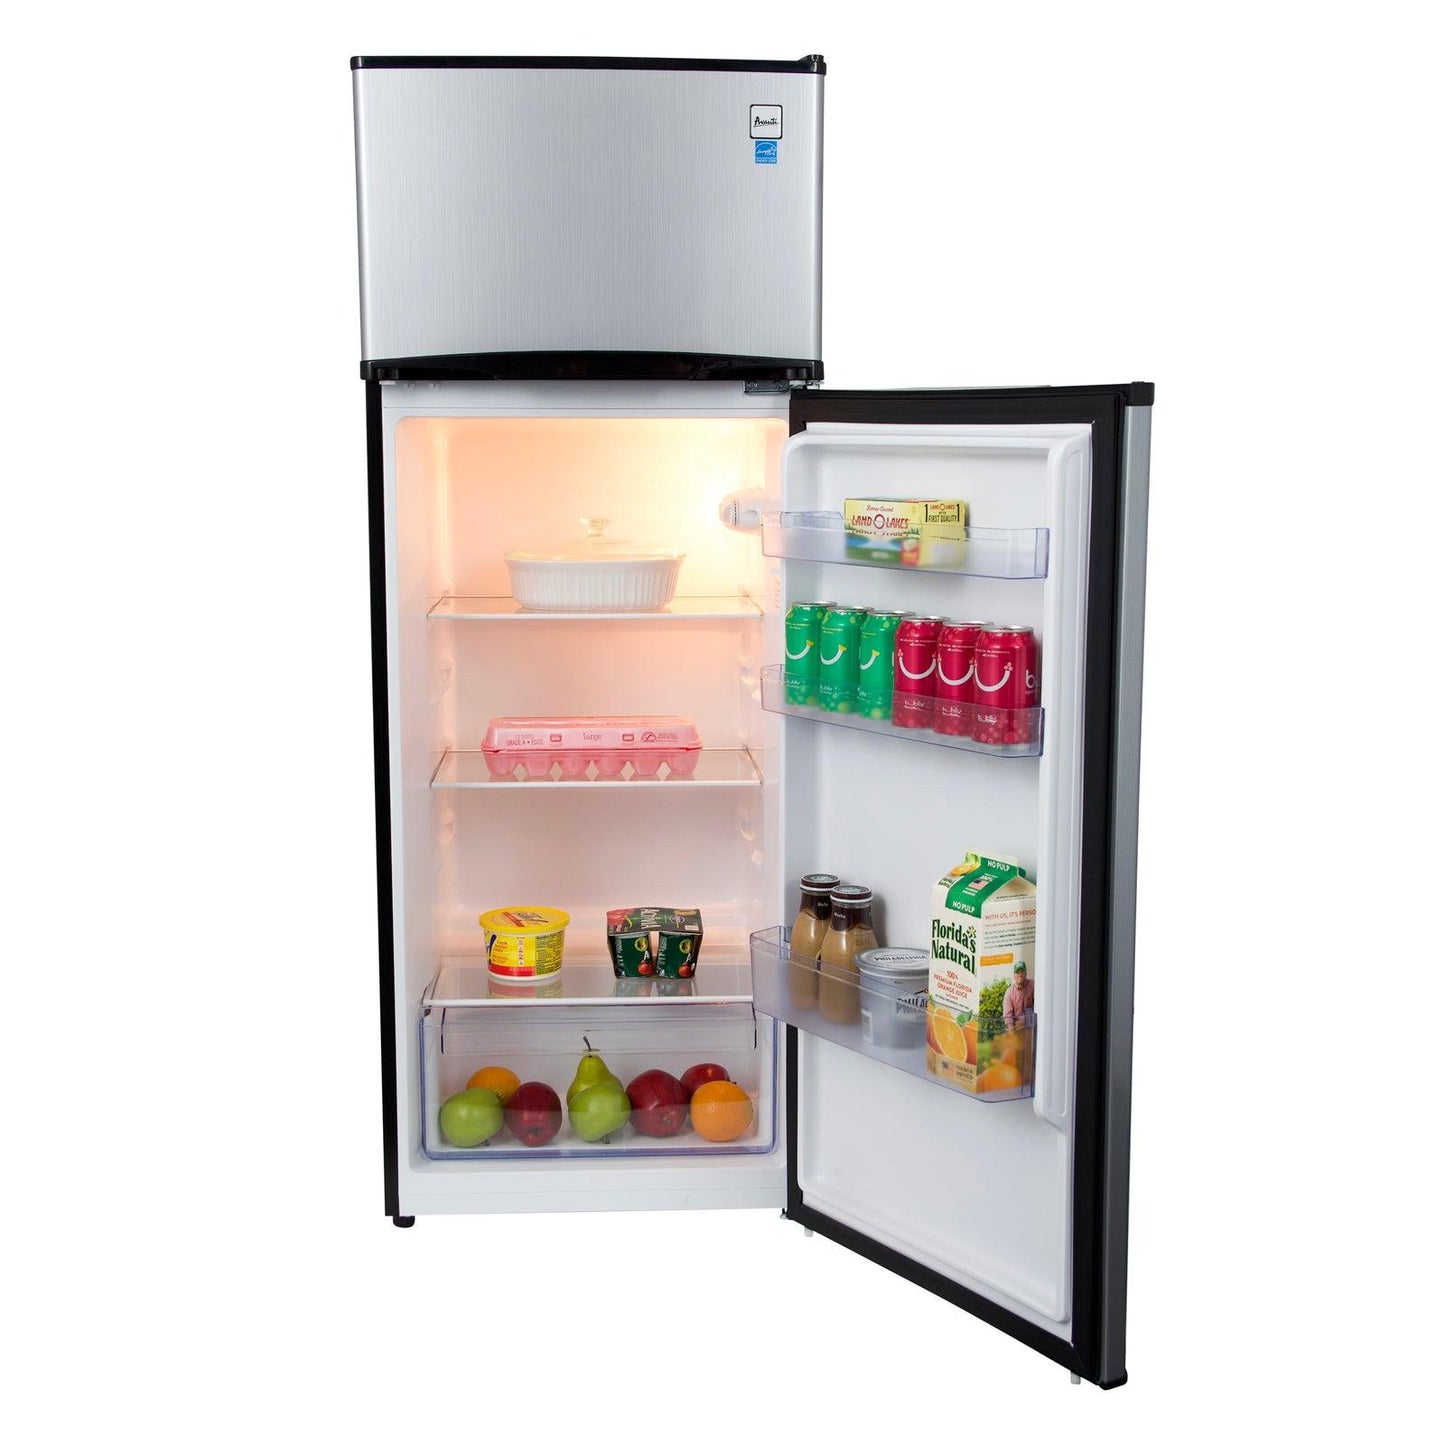 Avanti RA733B3S 7.3 Cu. Ft. Apartment Size Refrigerator